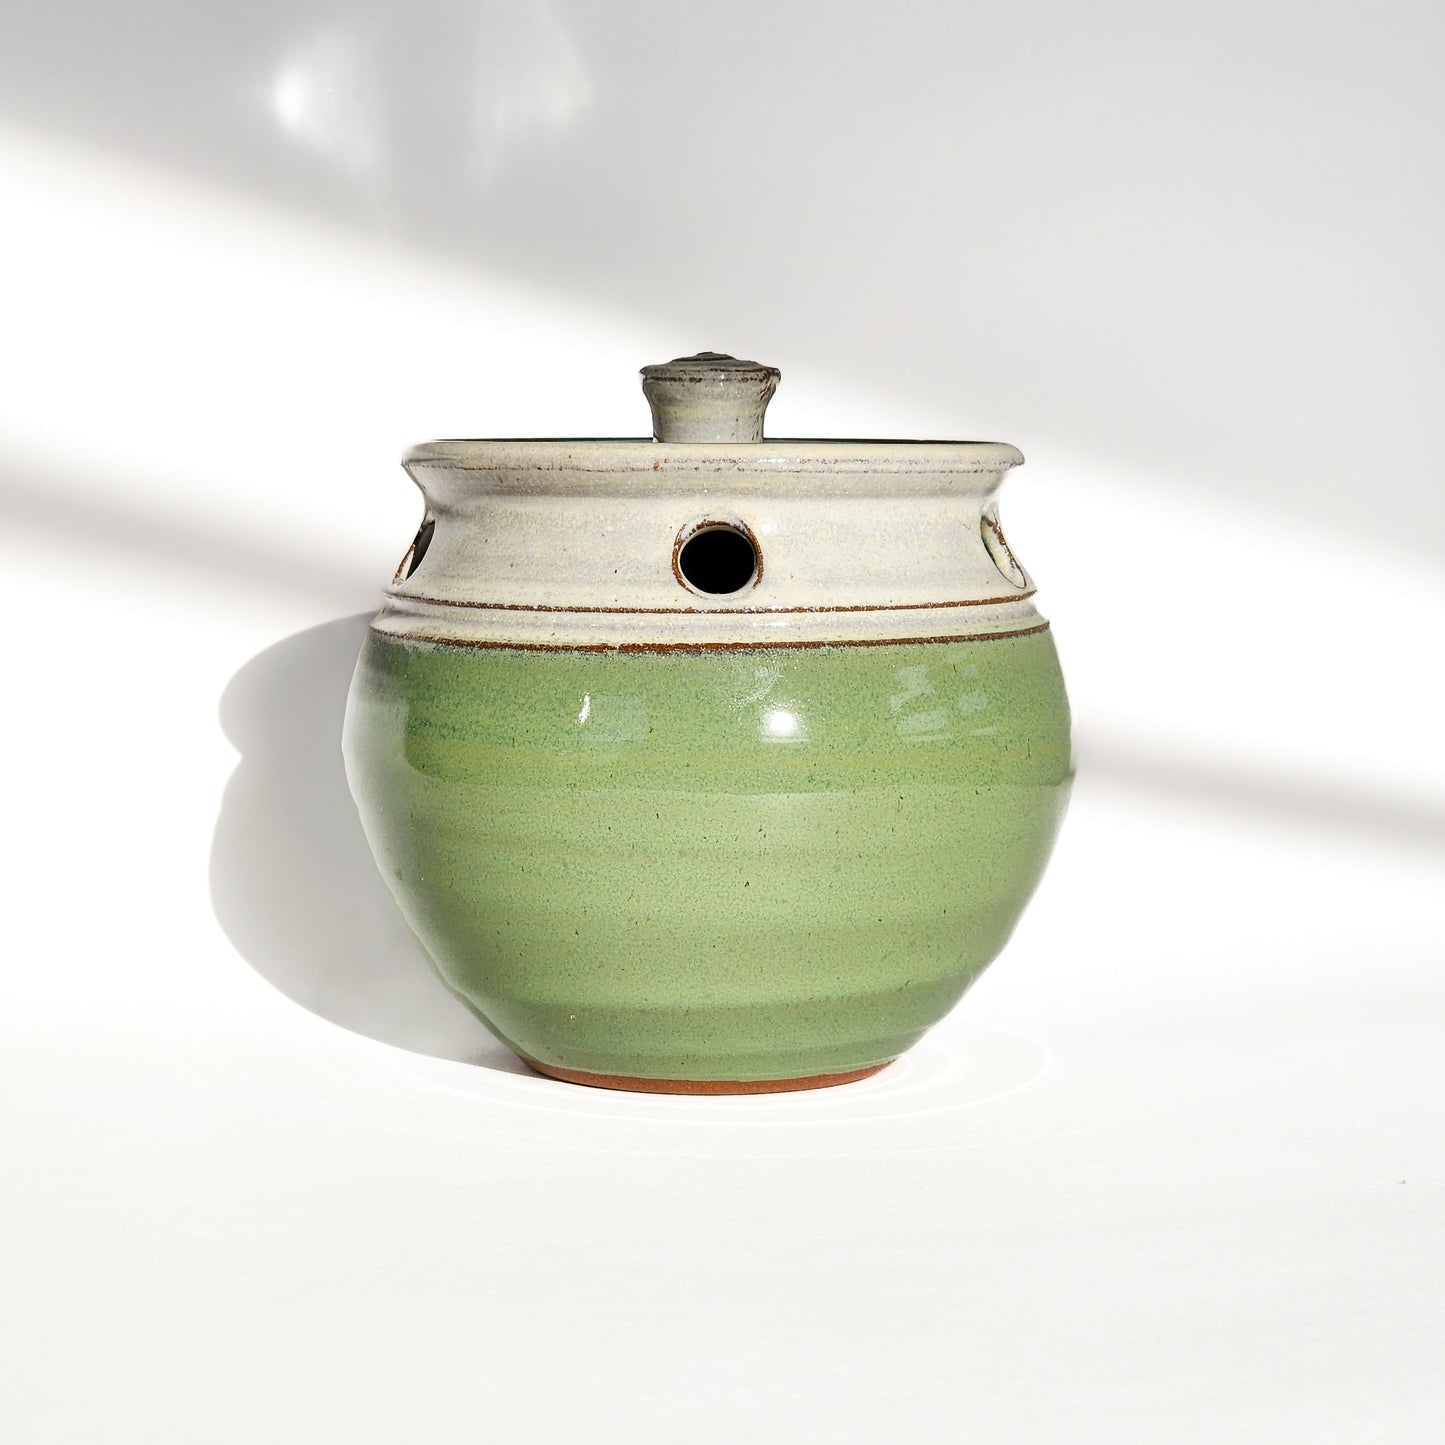 Image: A bud green ceramic garlic keeper, designed to store garlic bulbs and keep them fresh.